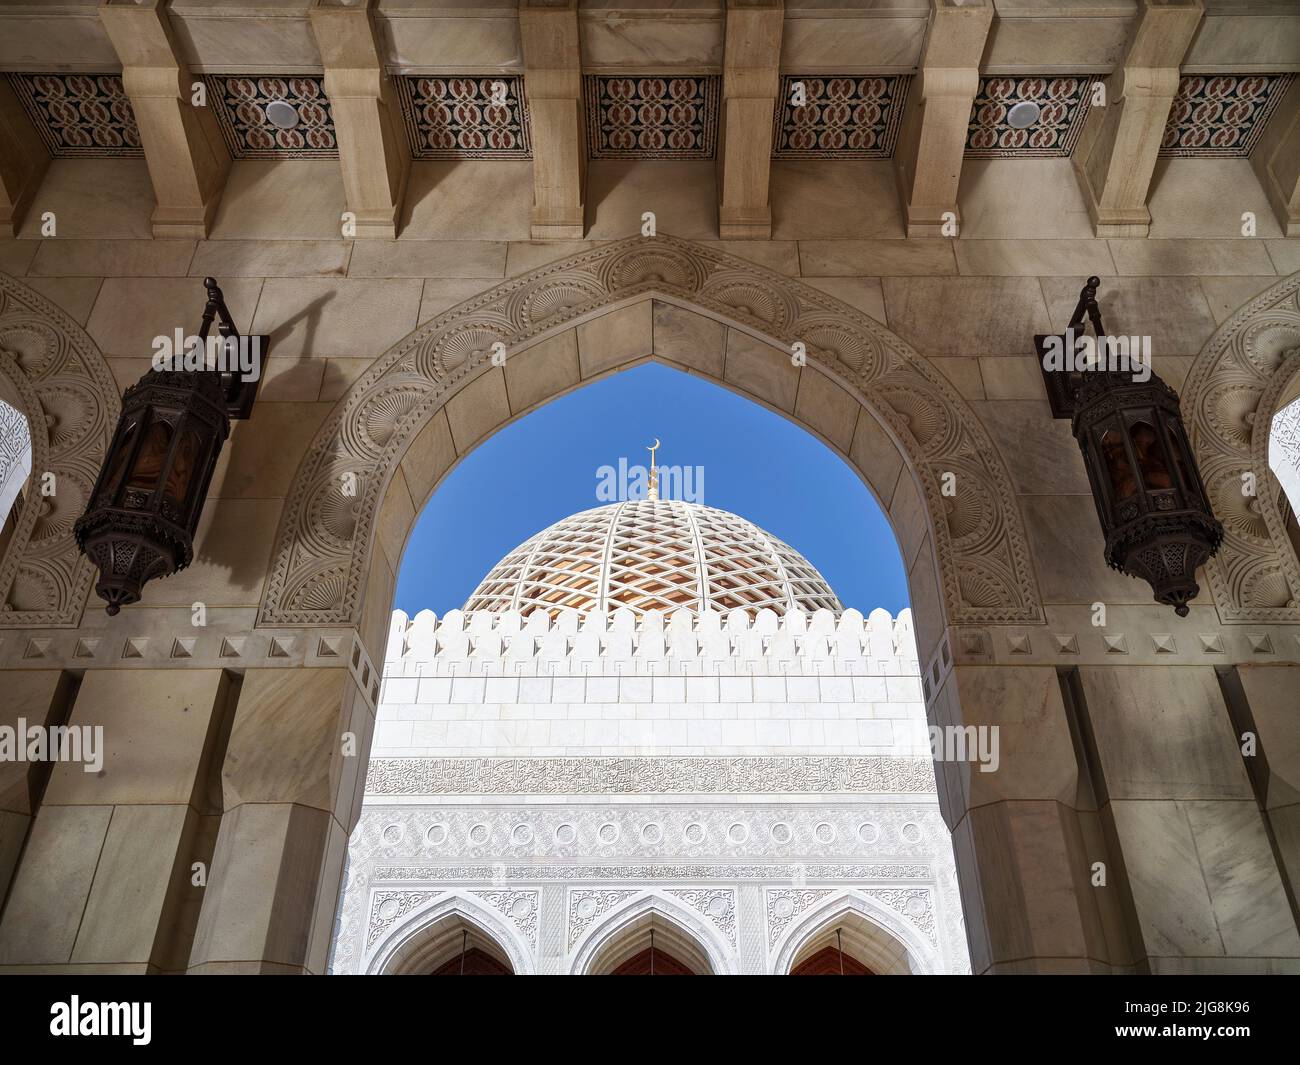 Gran Mezquita Sultán Qabus en Muscat, Omán. Foto de stock